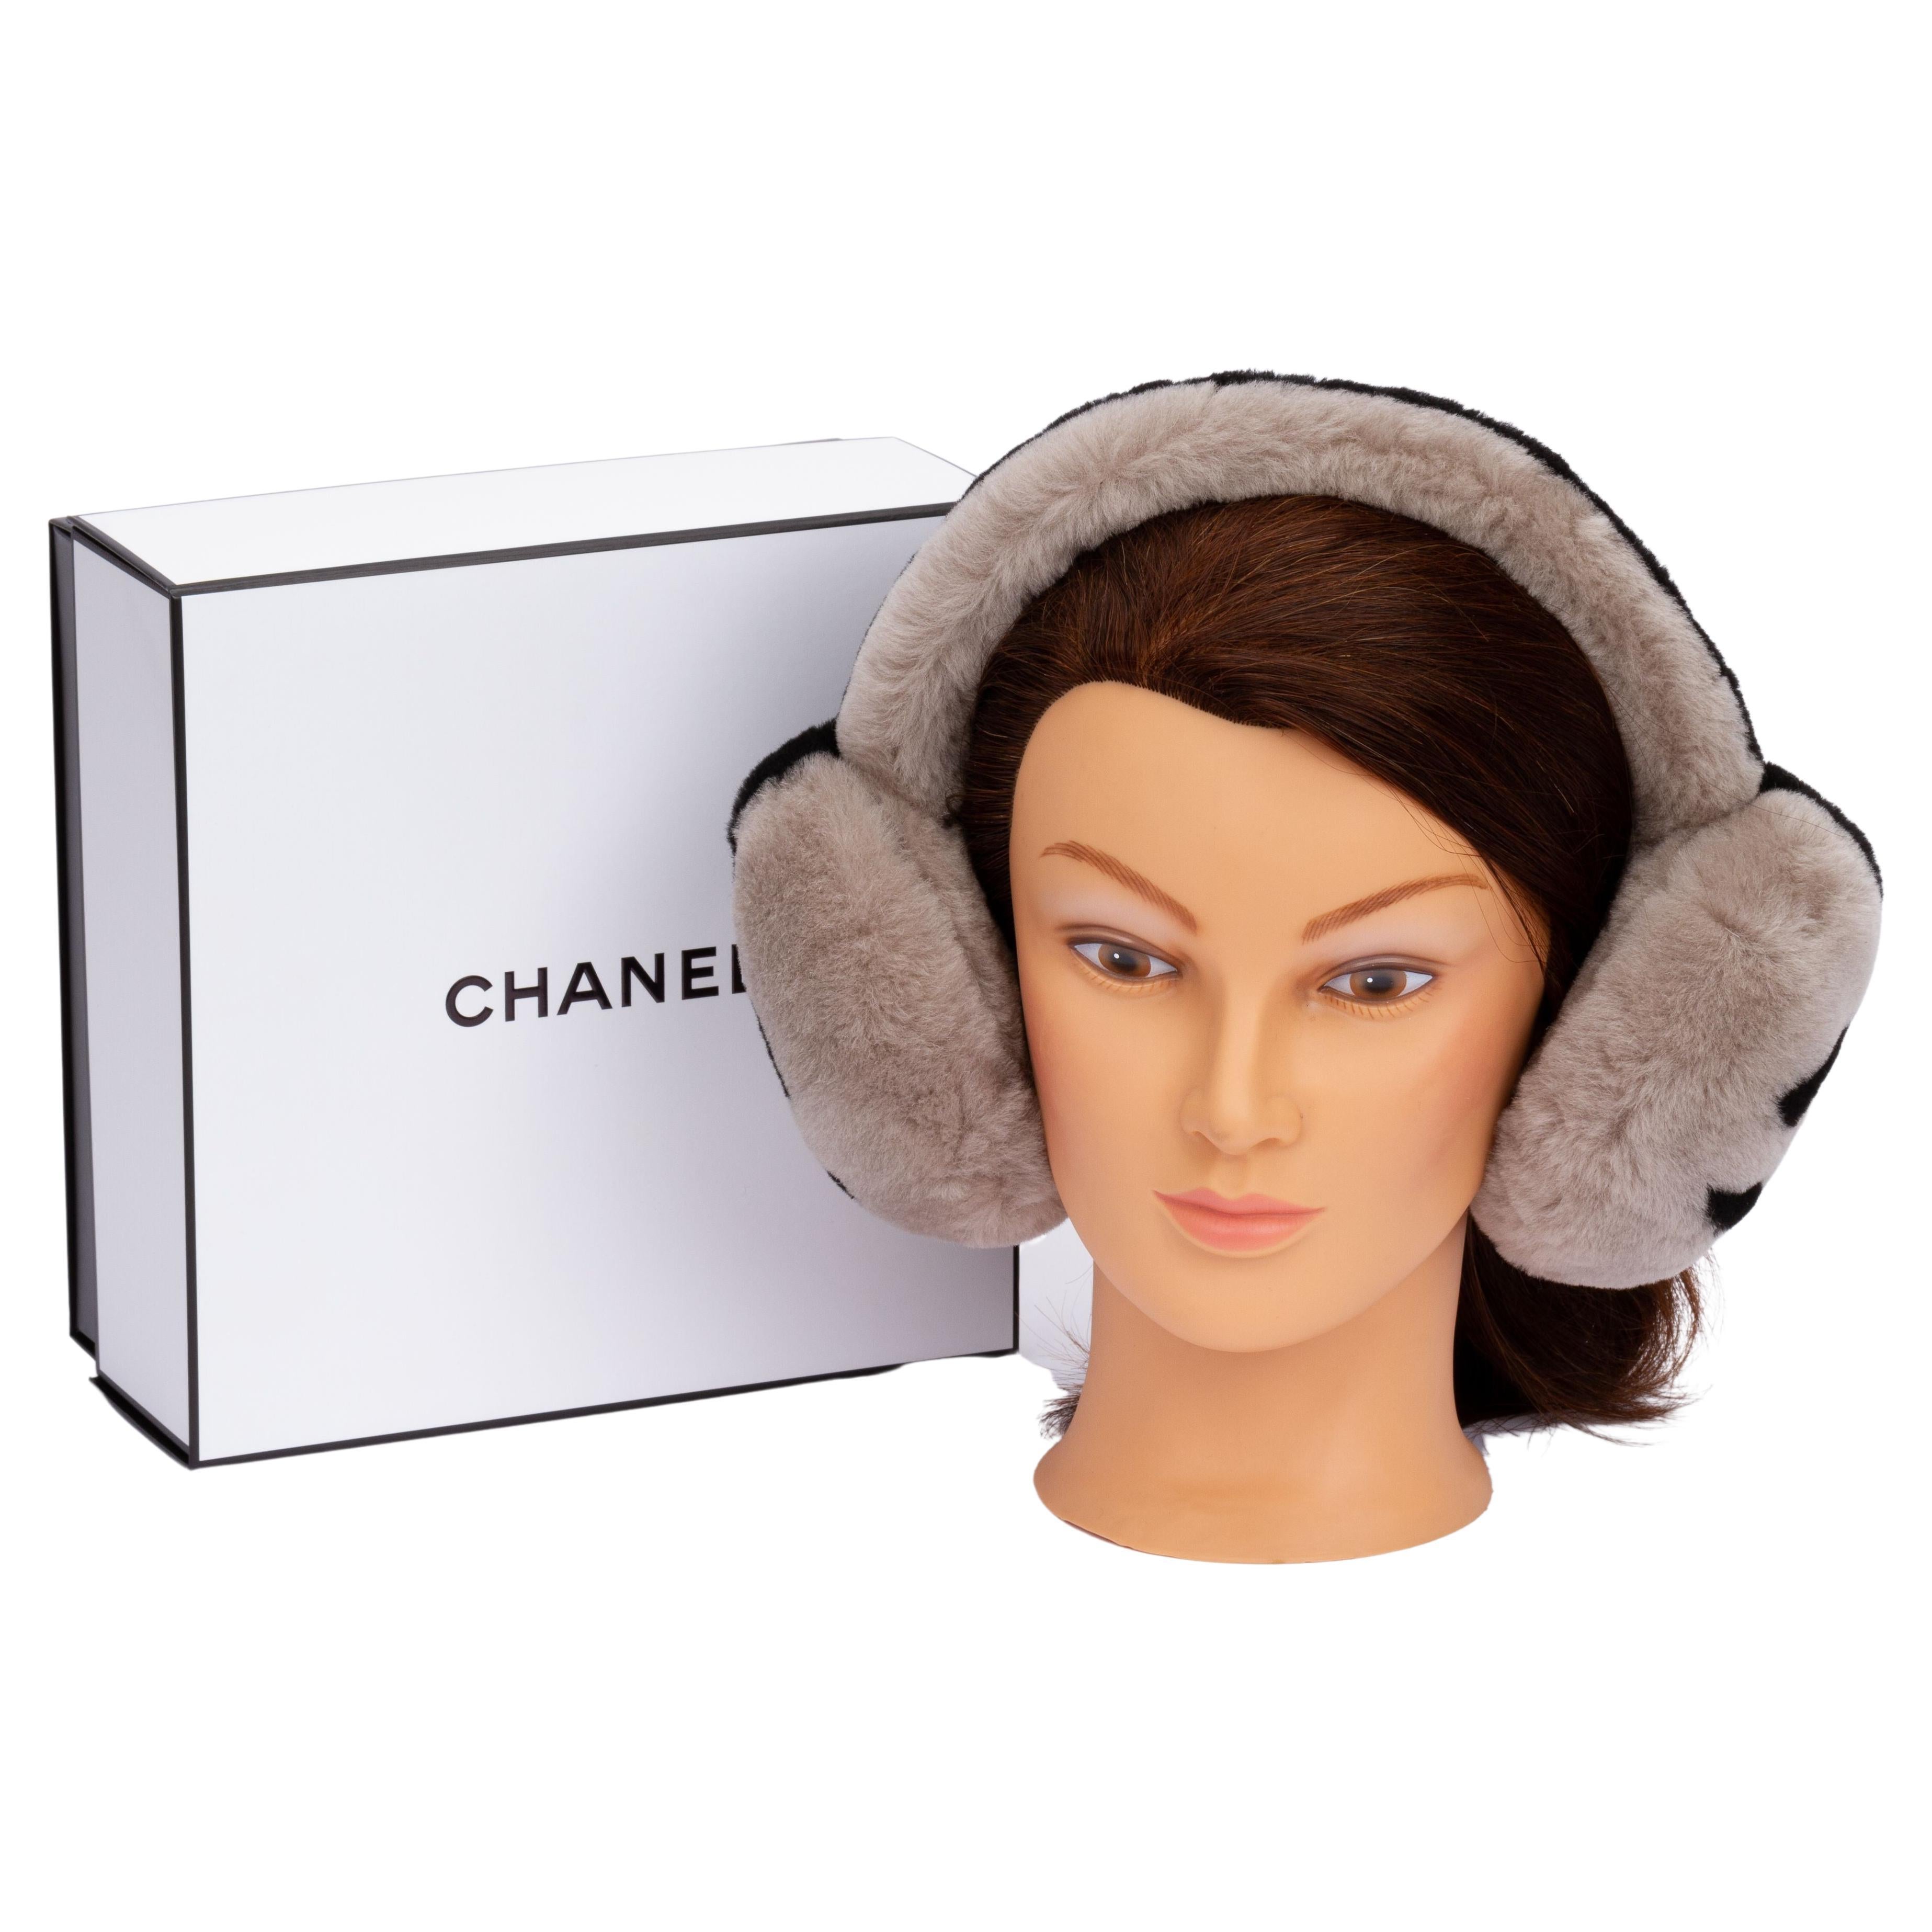 Chanel BNIB Ear Muffs Taupe/Black For Sale